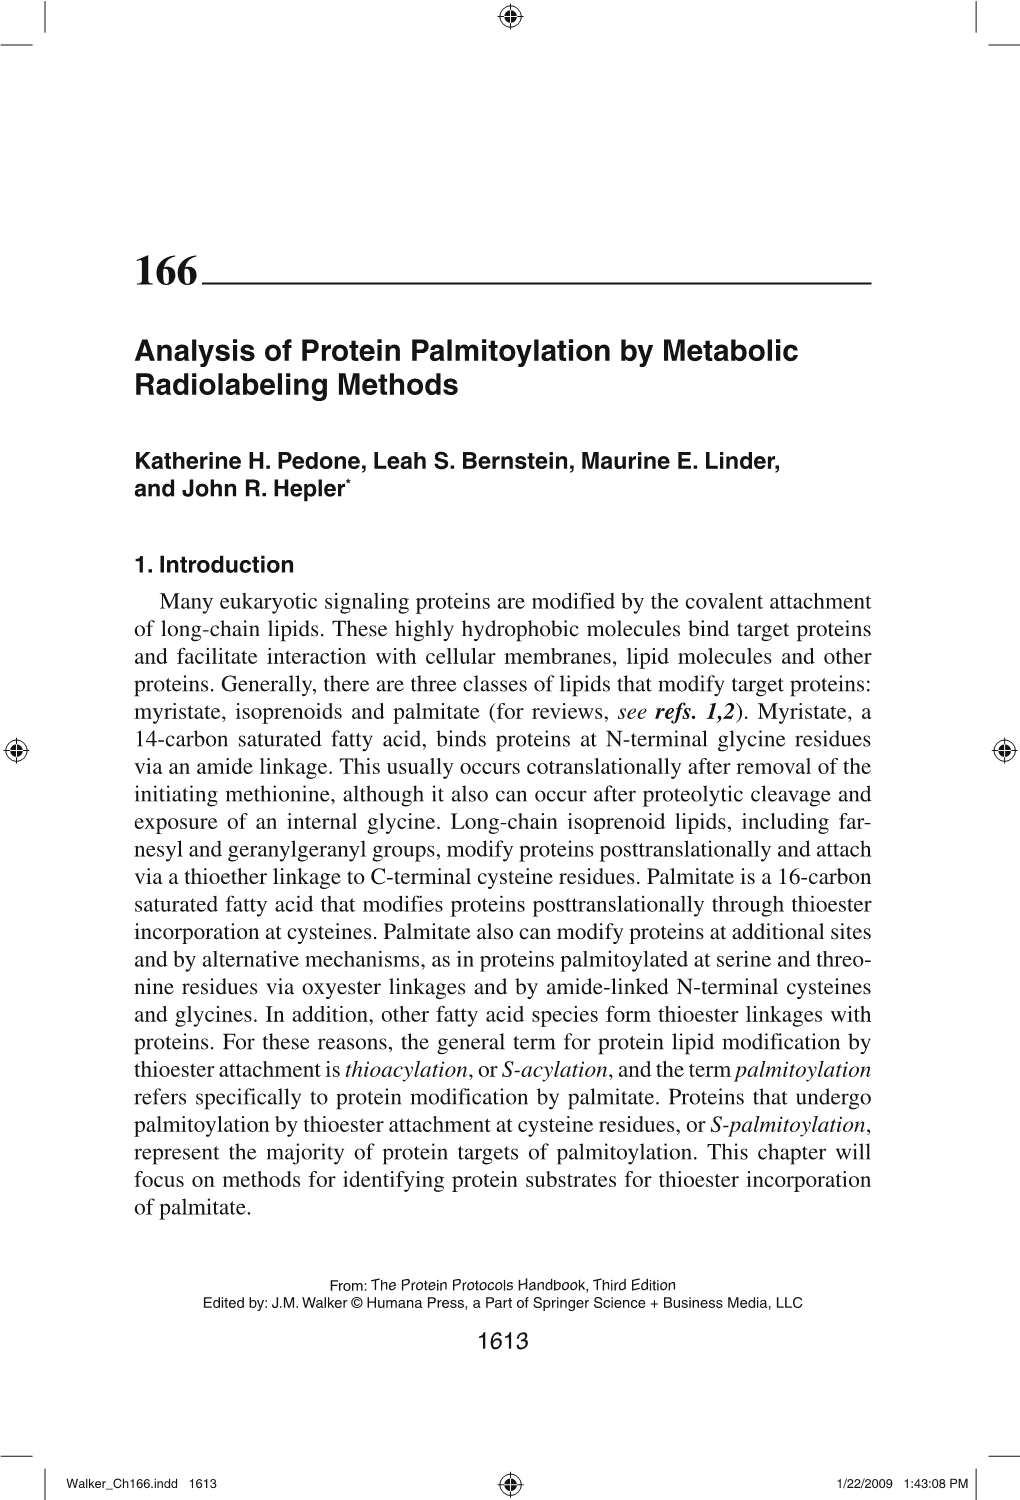 Analysis of Protein Palmitoylation by Metabolic Radiolabeling Methods